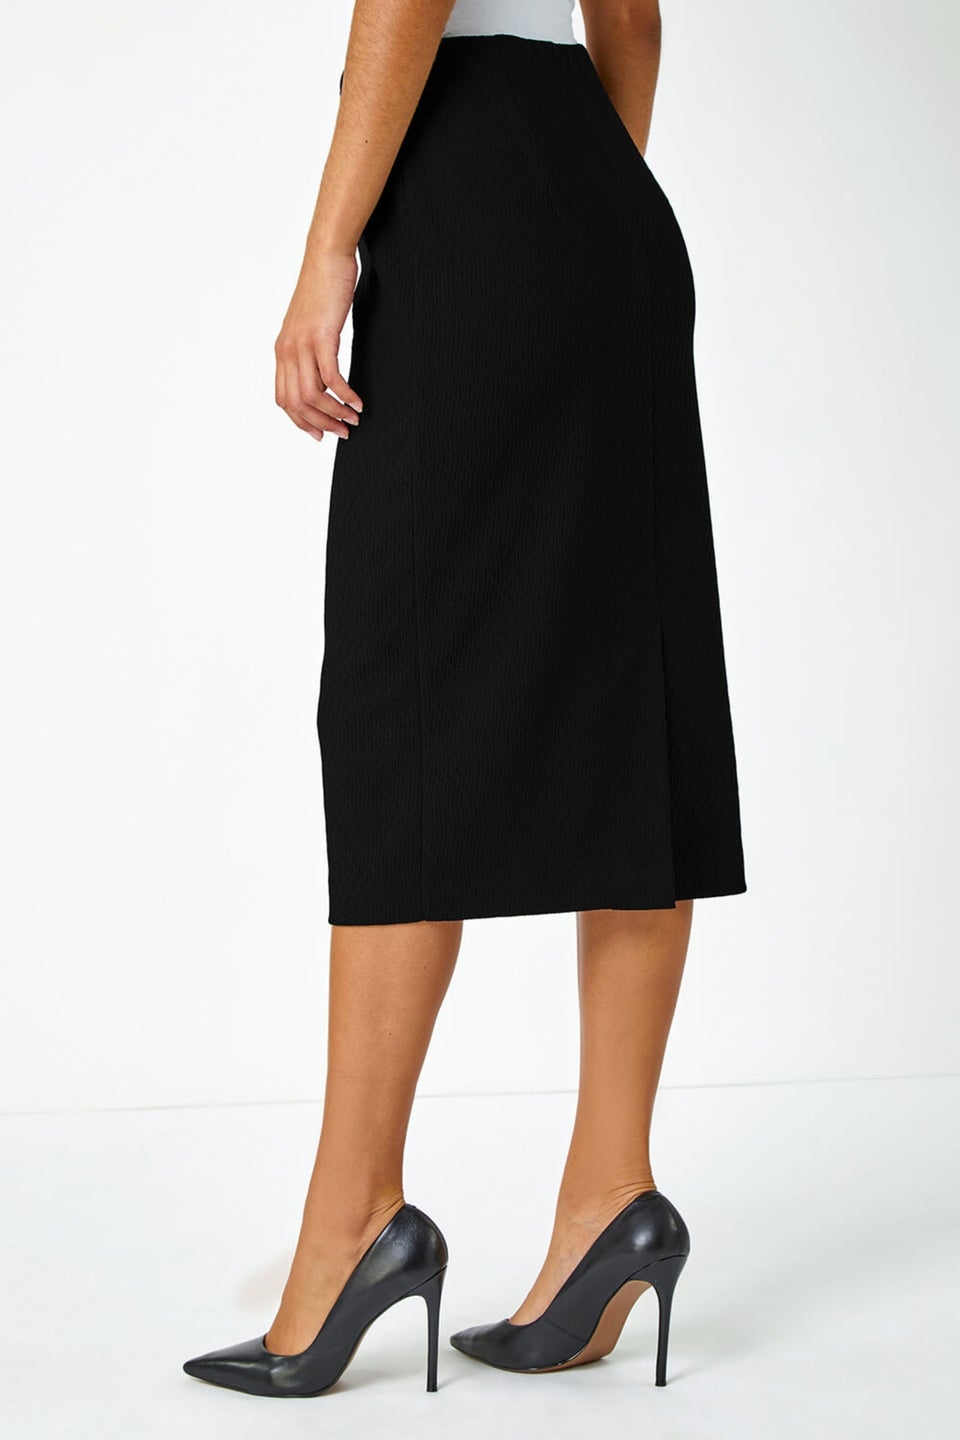 Roman Black Stretch Jersey Textured Pencil Skirt